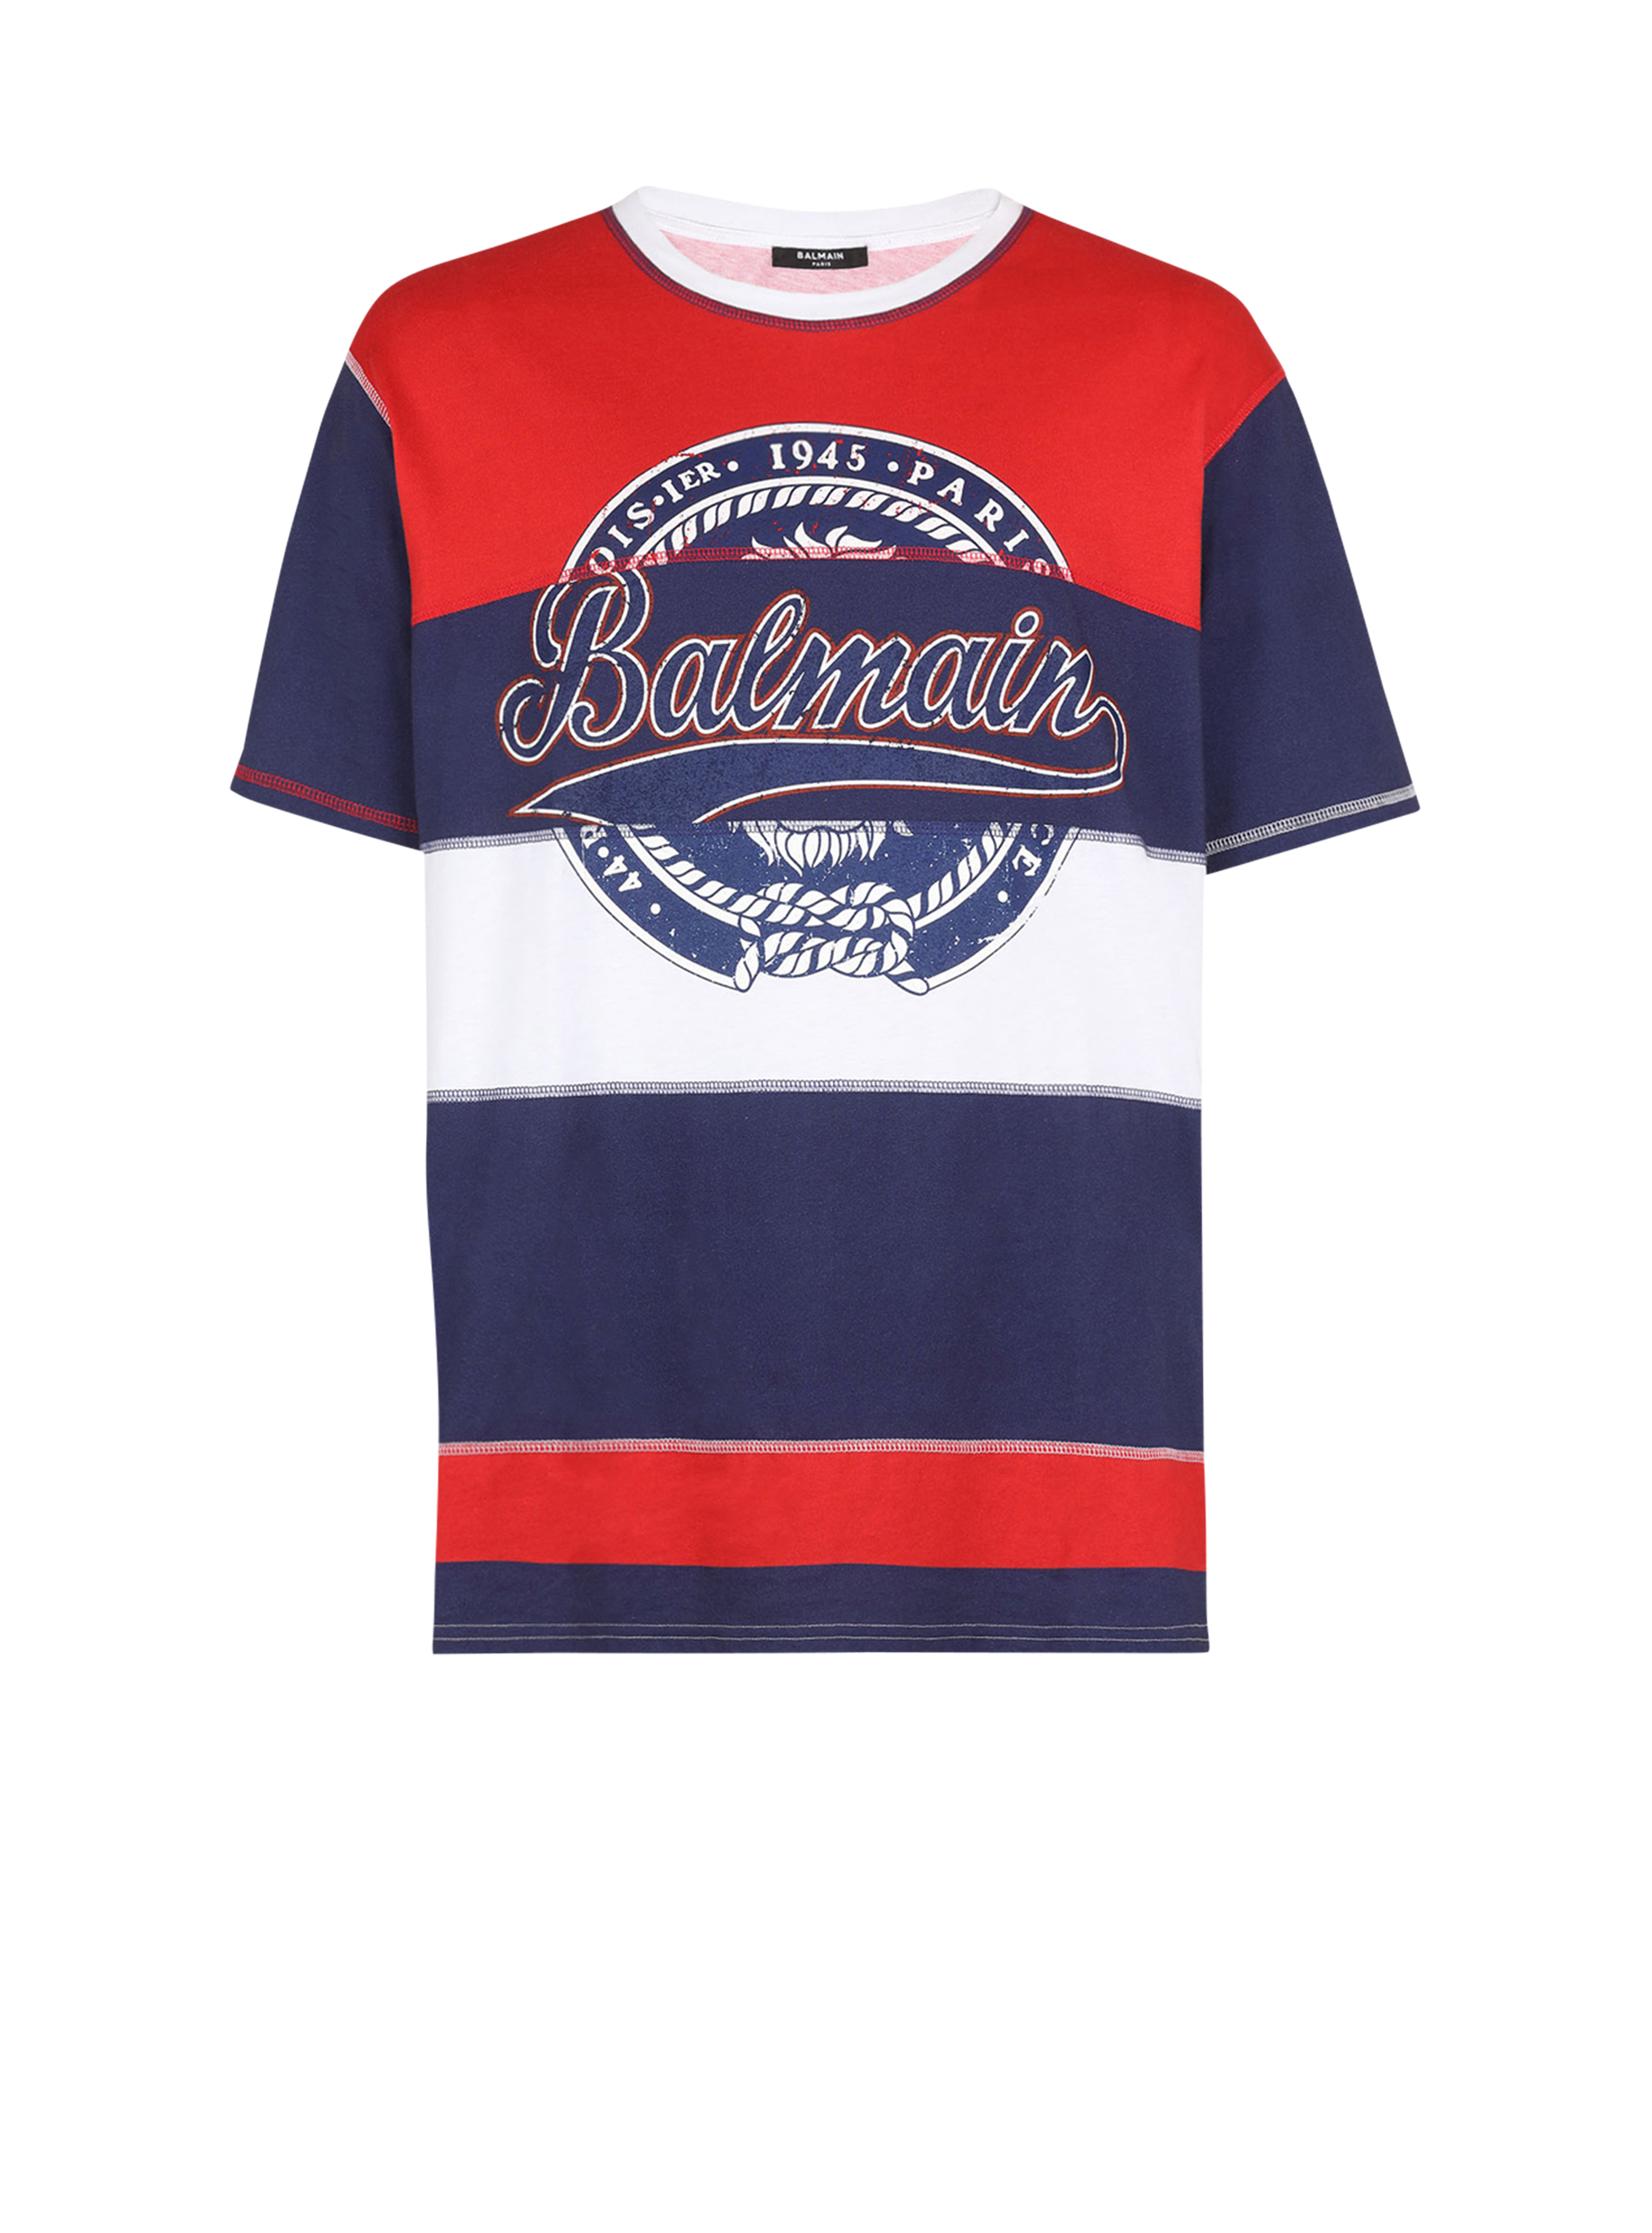 HIGH SUMMER CAPSULE KOLLEKTION – Baumwoll-T-Shirt, multicolor